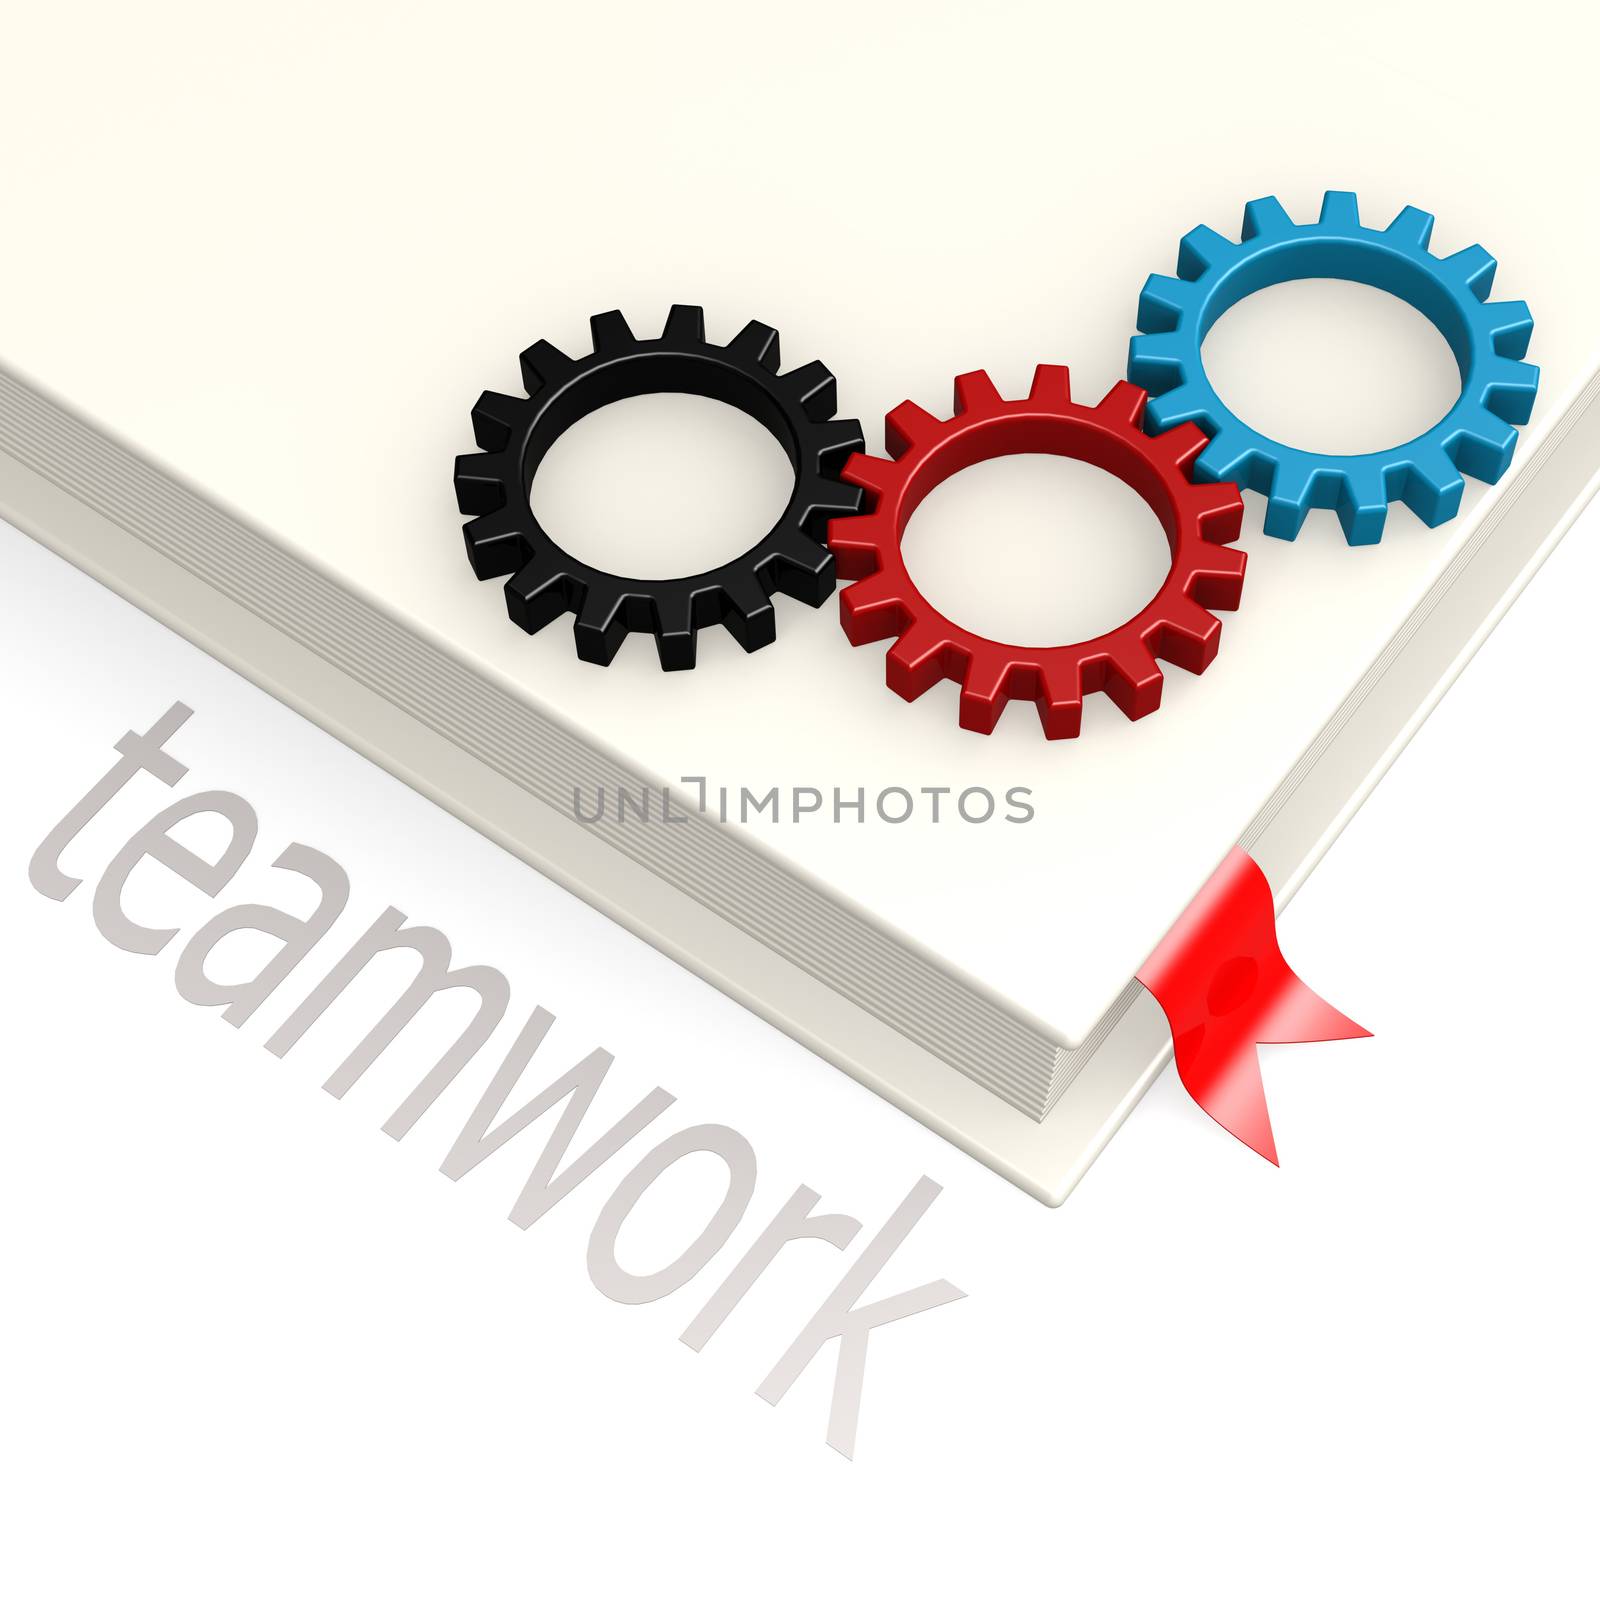 Teamwork book